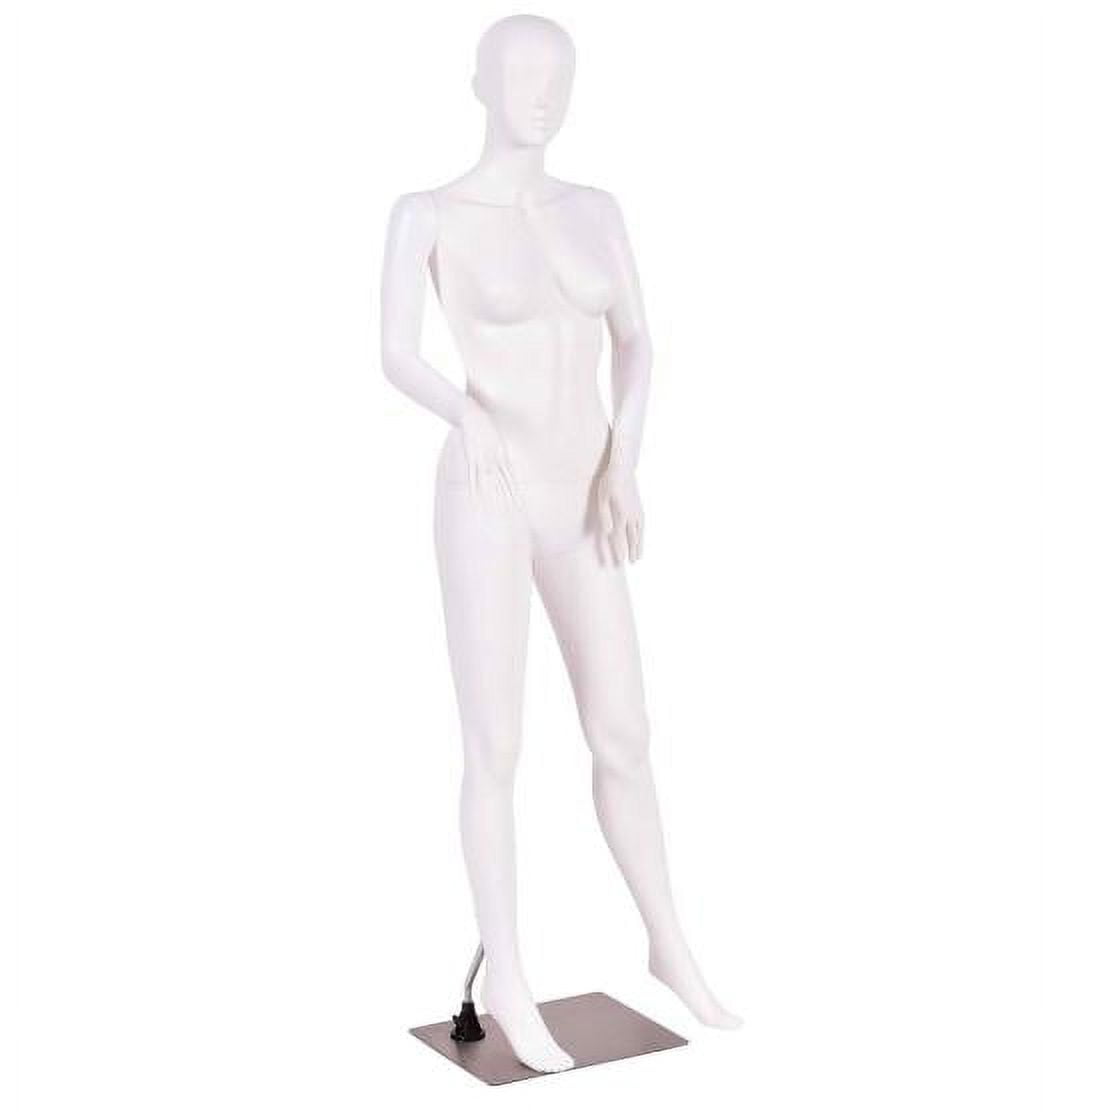 Gymax Female Mannequin Egghead Plastic Full Body Dress Form Display